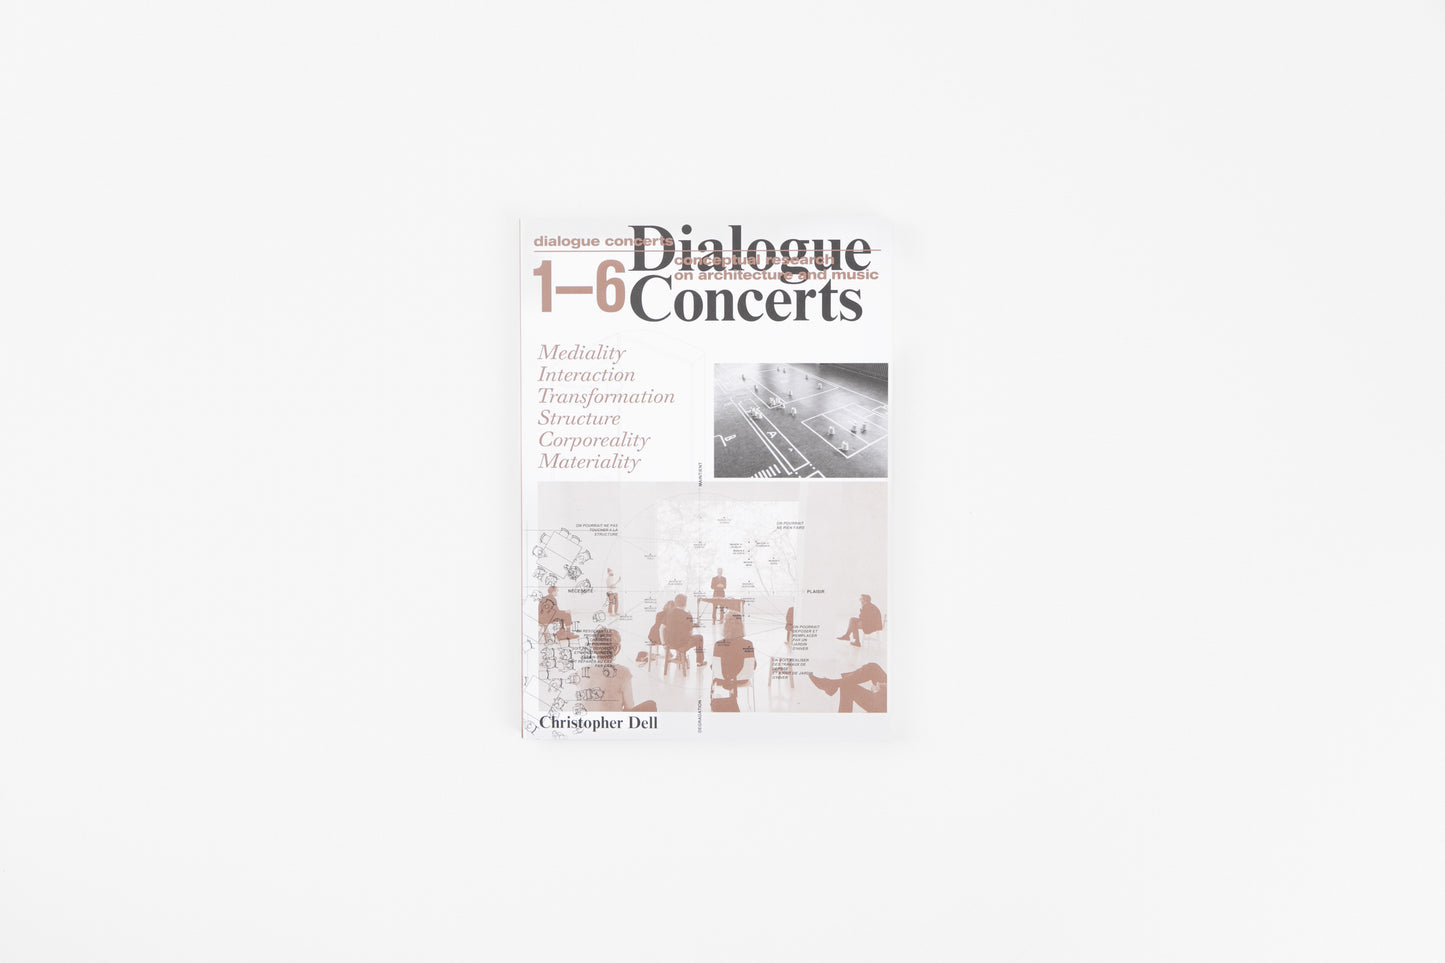 Dialogue Concerts